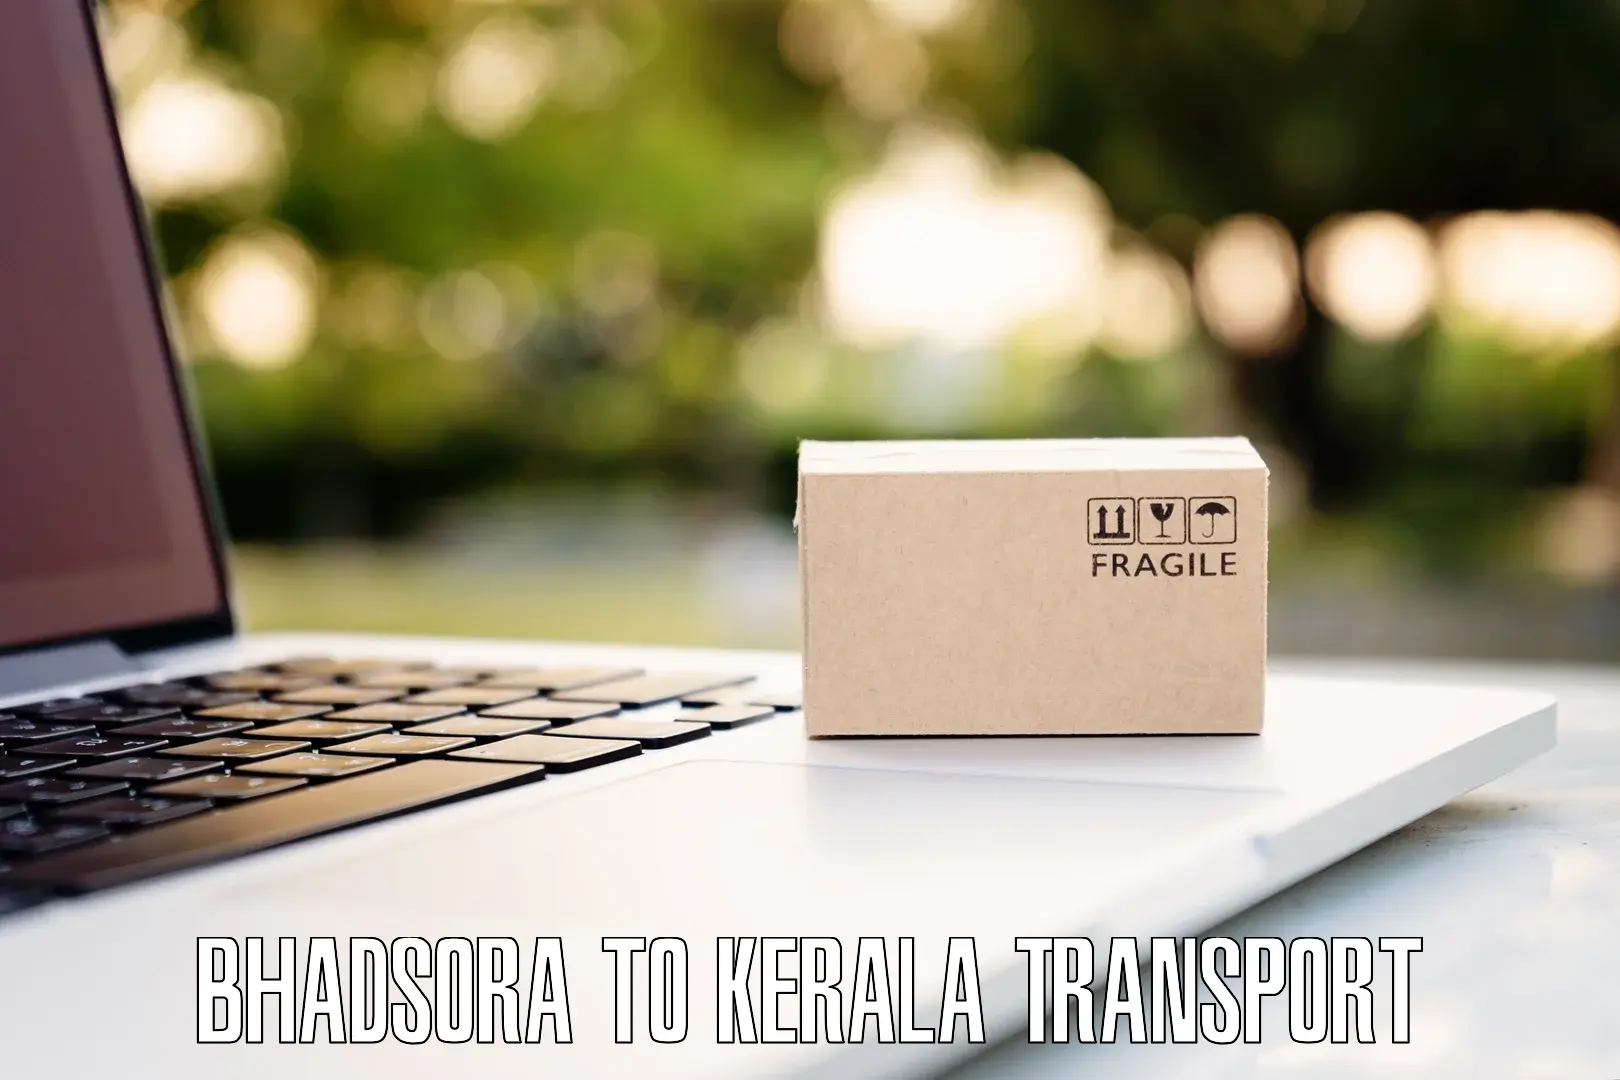 Daily transport service Bhadsora to Kottayam